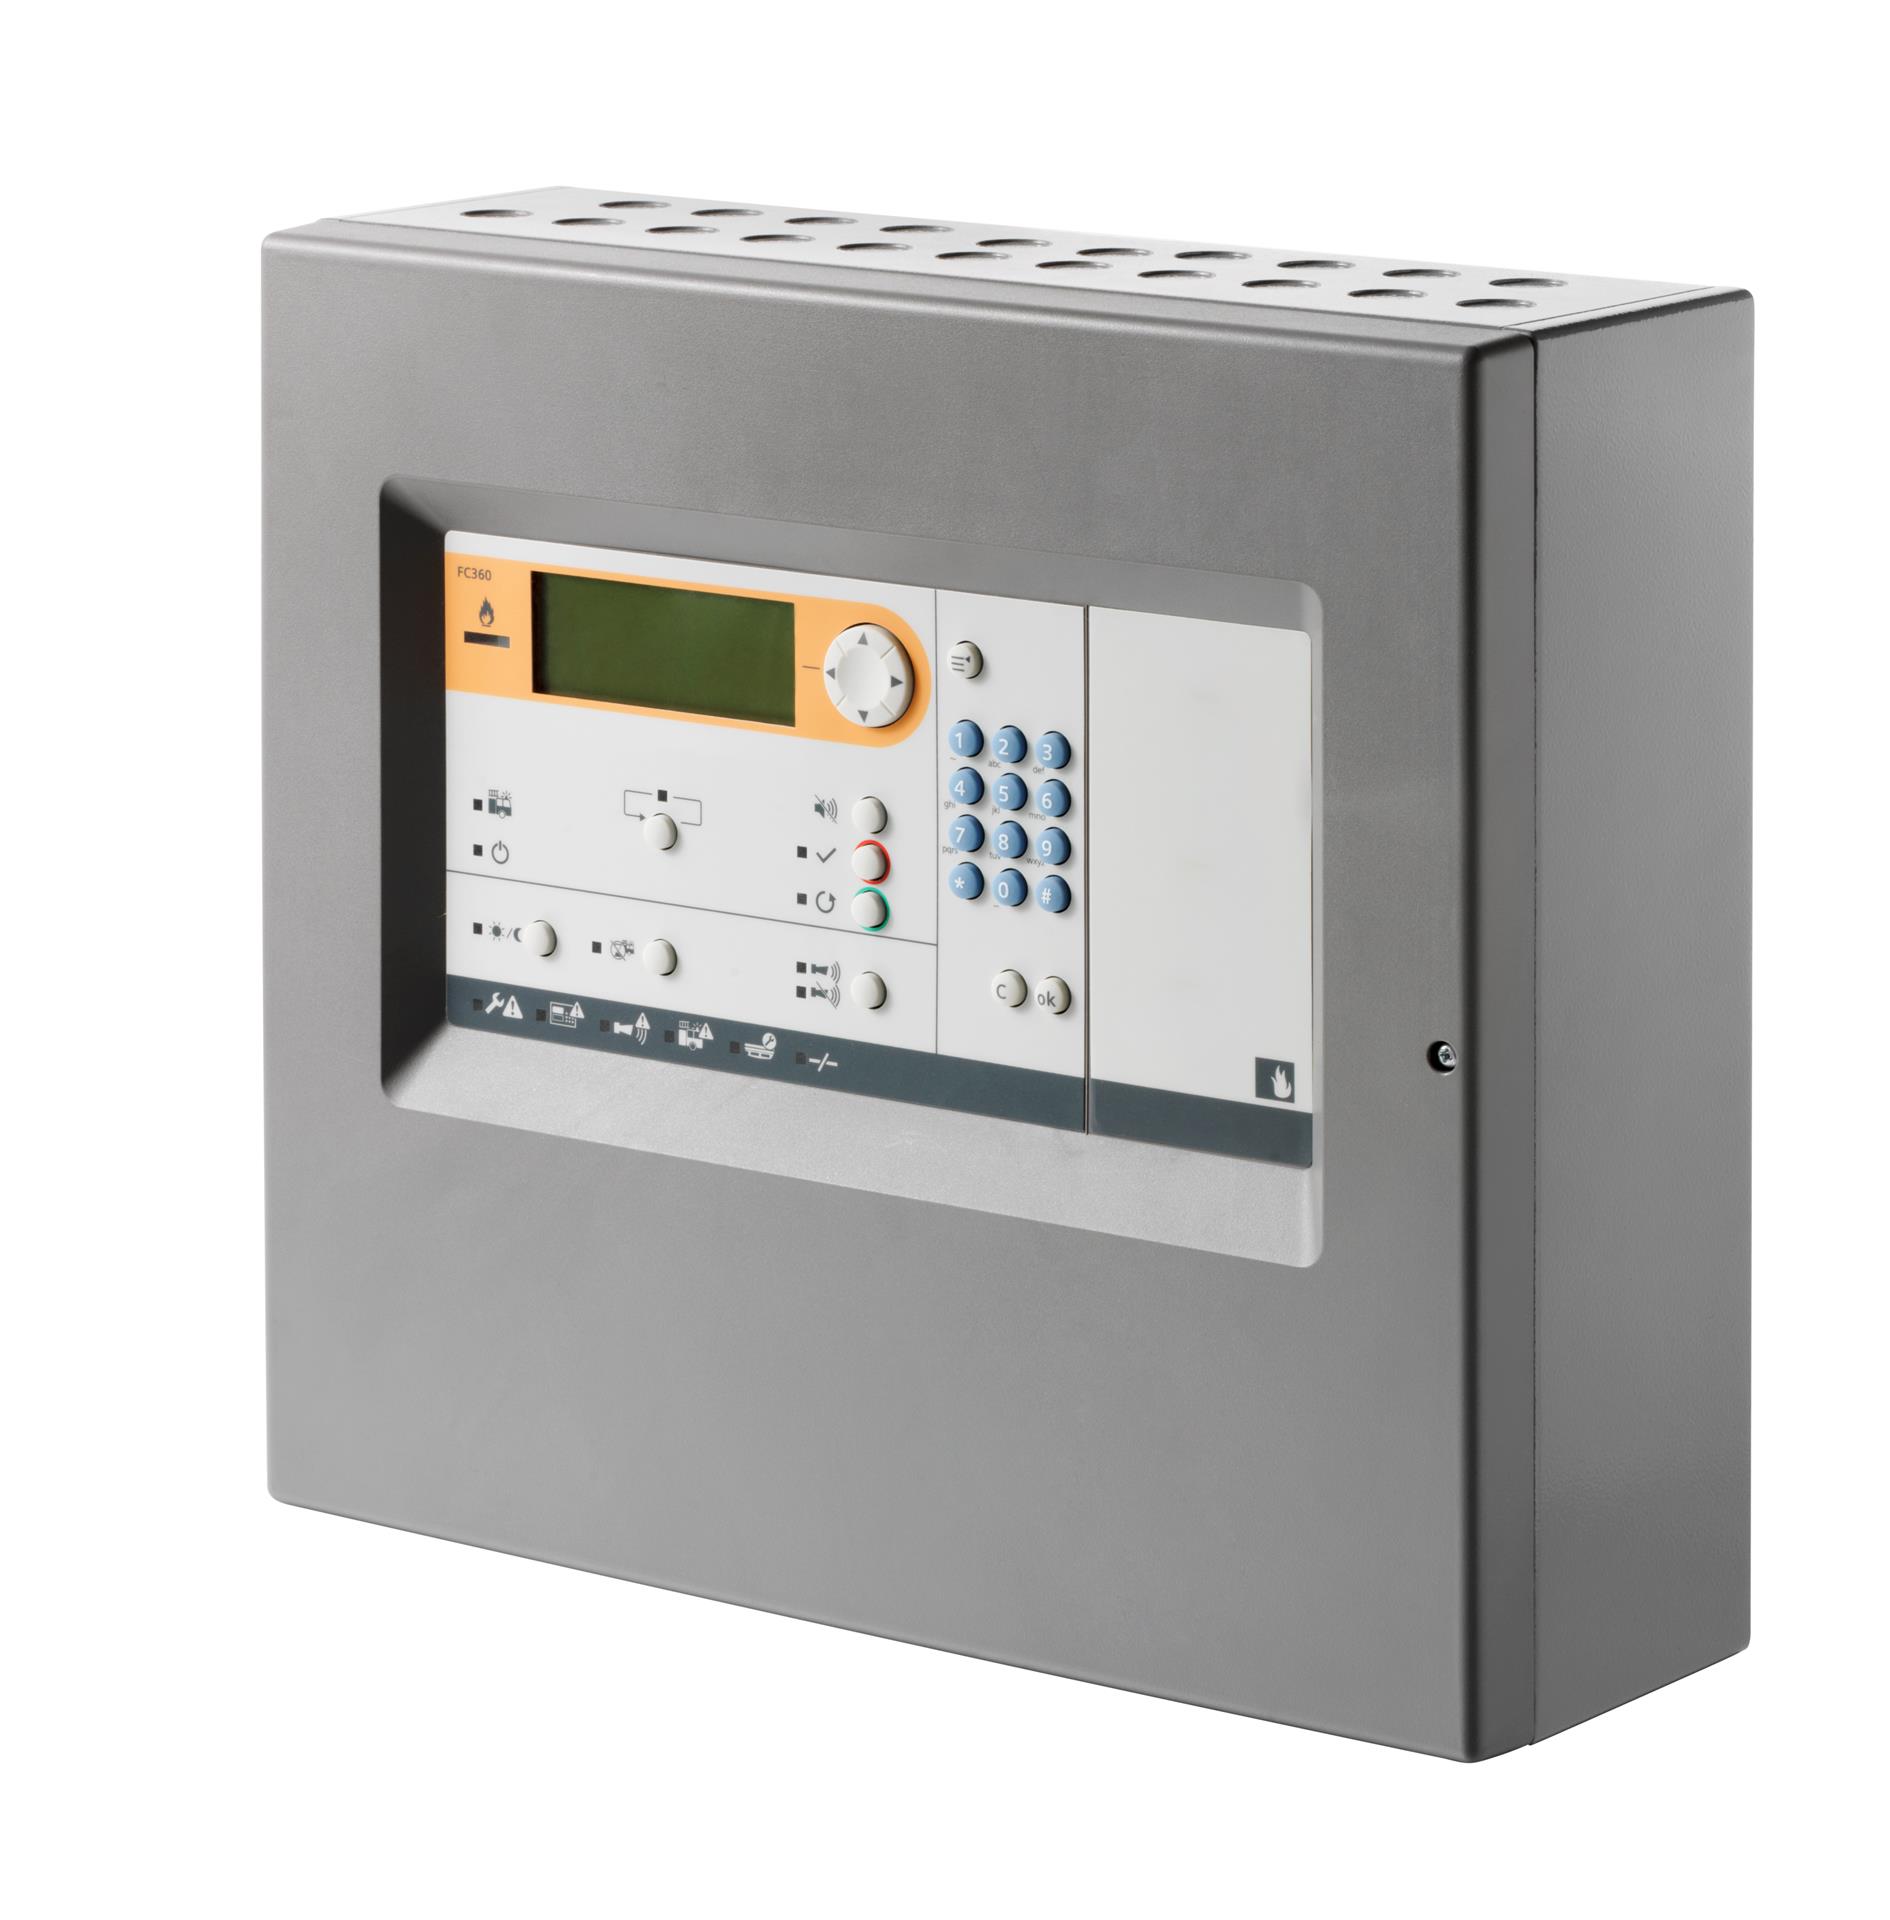 SIEMENS FC361-ZA Cerberus FIT İnteraktif Yangın Algılama ve Alarm Kontrol Paneli – Konfor Kasa (1 loop, 126 adres)